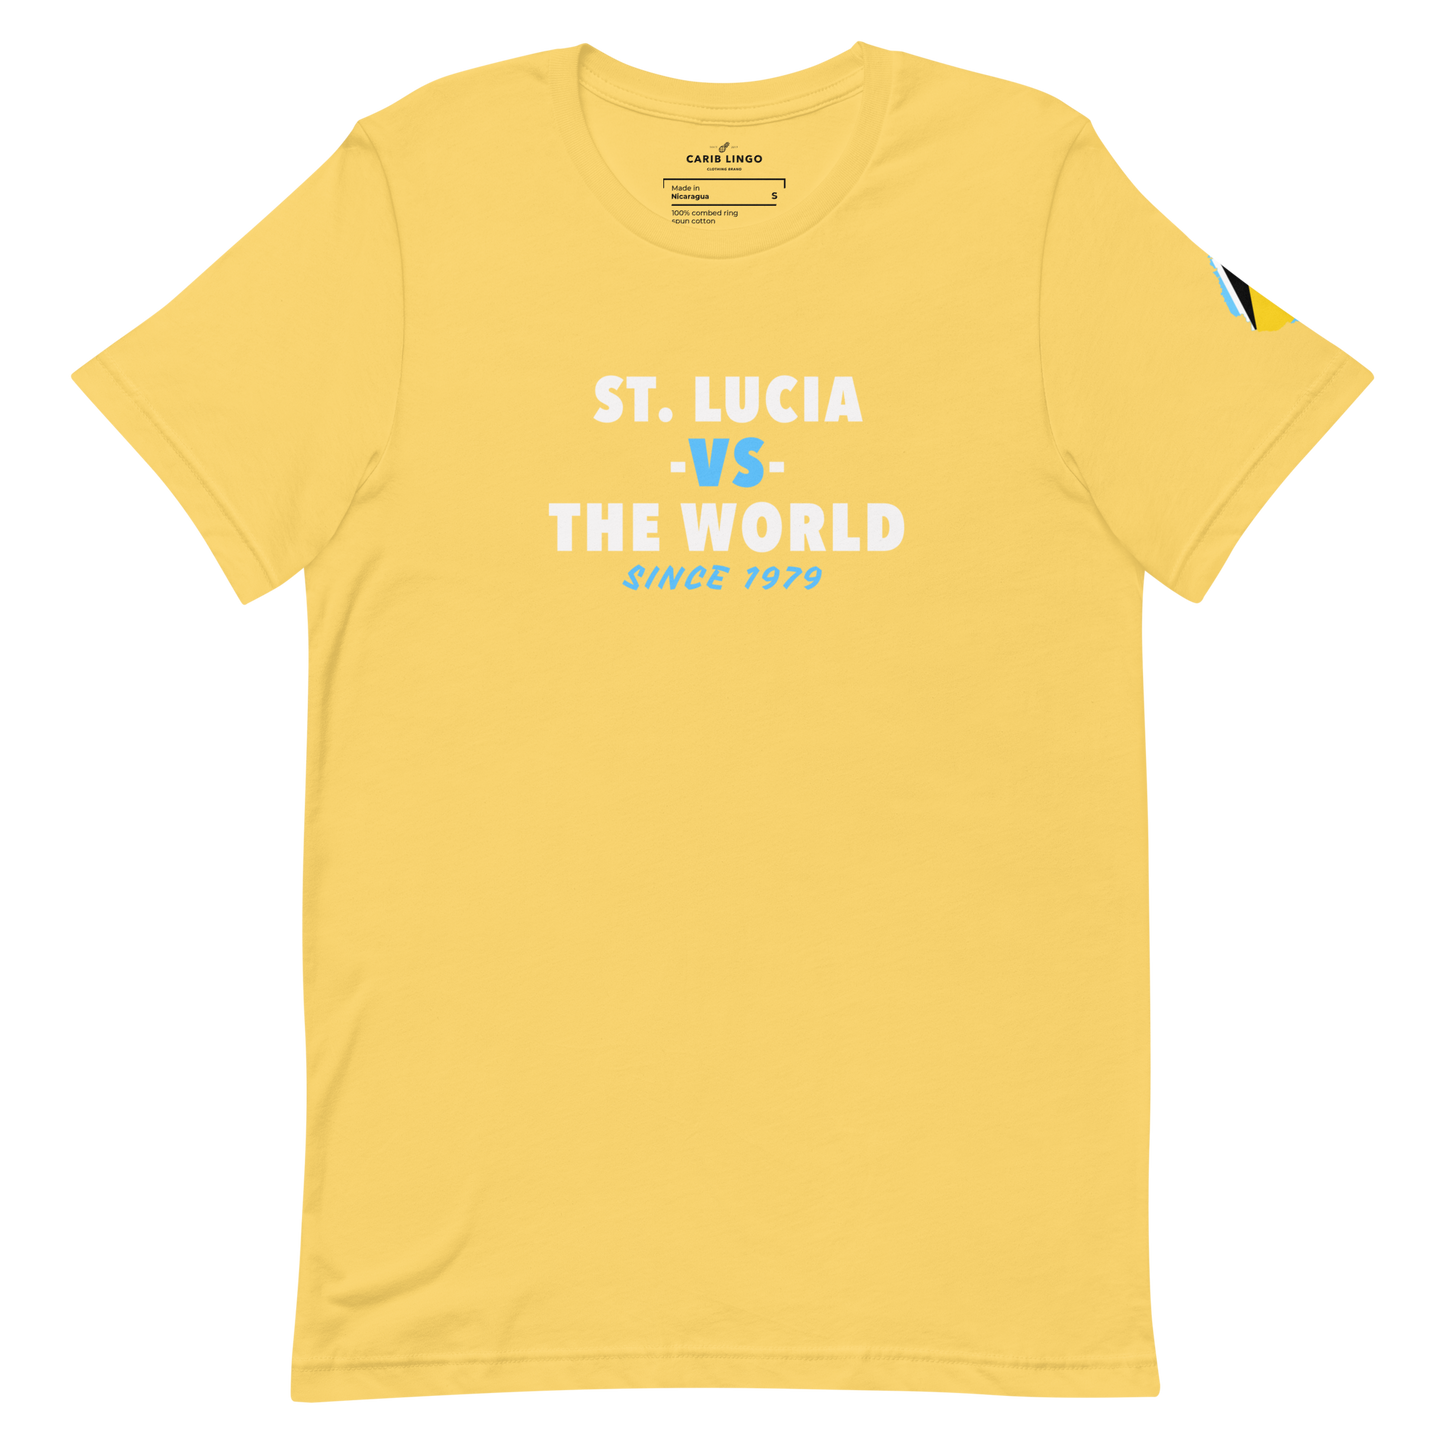 St. Lucia -vs- The World t-shirt